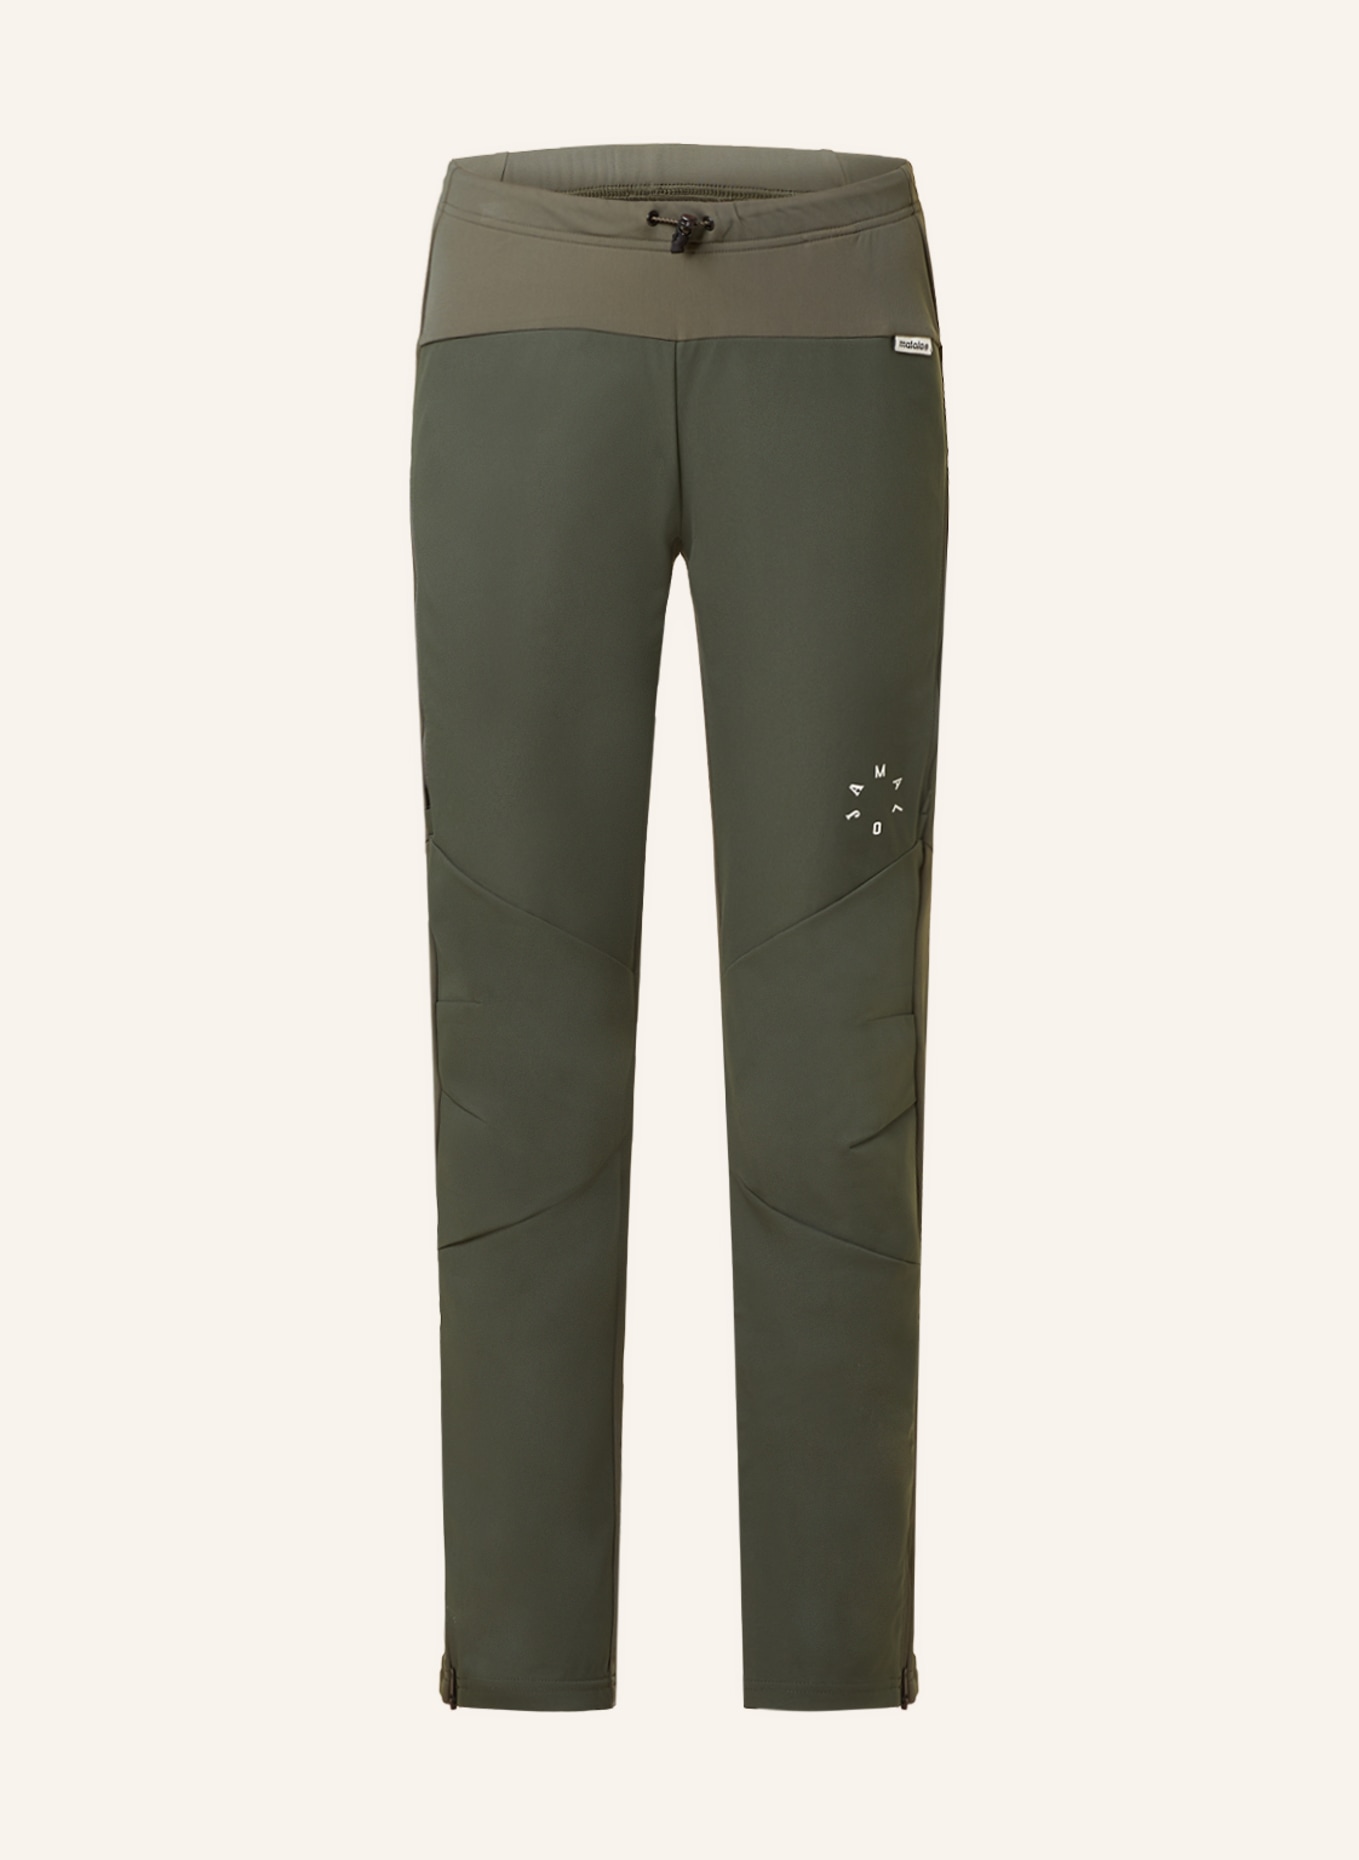 CHLOÉ + Fusalp striped paneled bootcut ski pants SIZE FR34 ASO KATE Brand  New | eBay